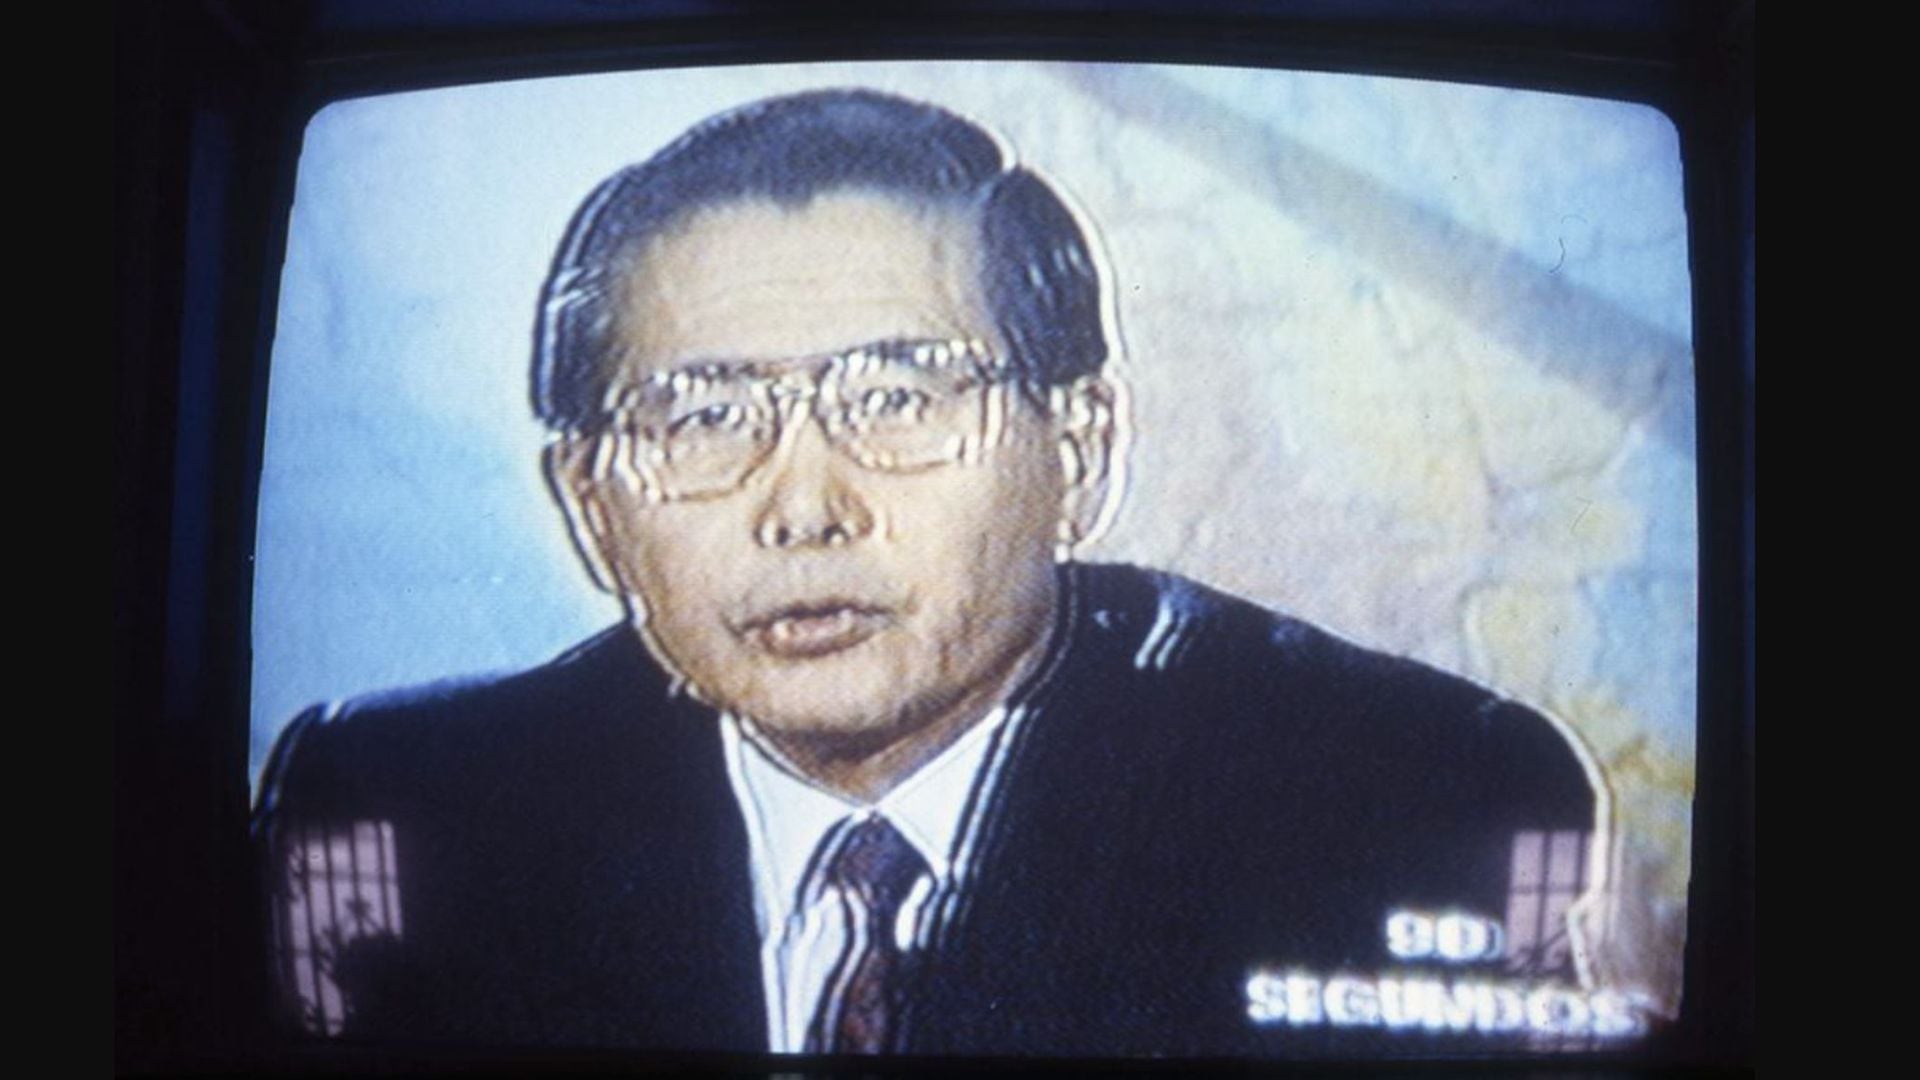 Autogolpe - Alberto Fujimori - 1992 - Perú - historias - 4 abril